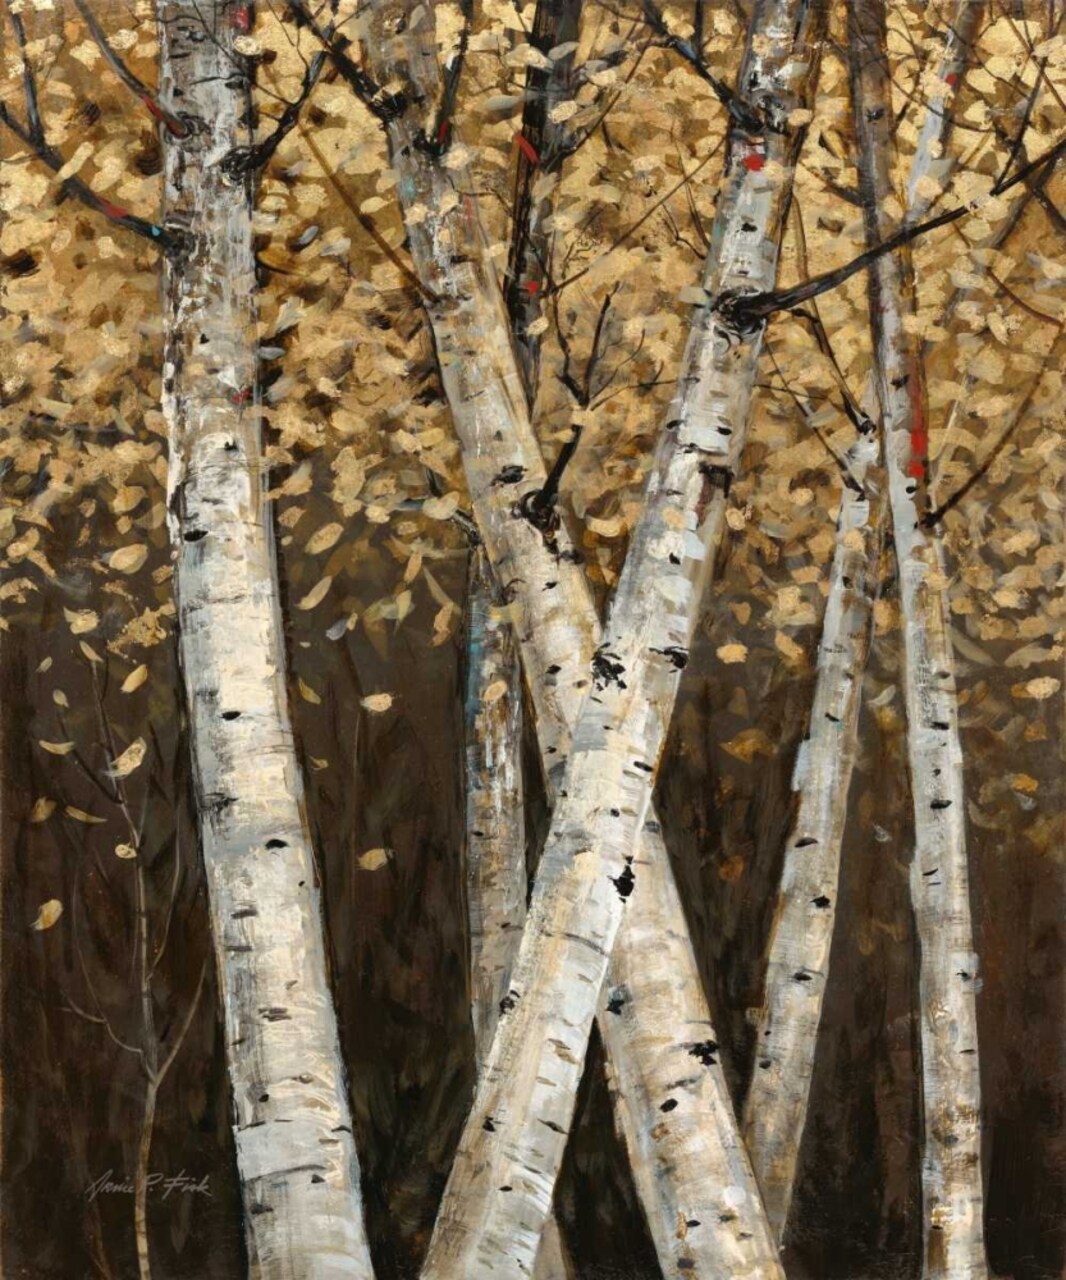 Shimmering Birches 1 Poster Print by Arnie Fisk - Item # VARPDX011FIS1121